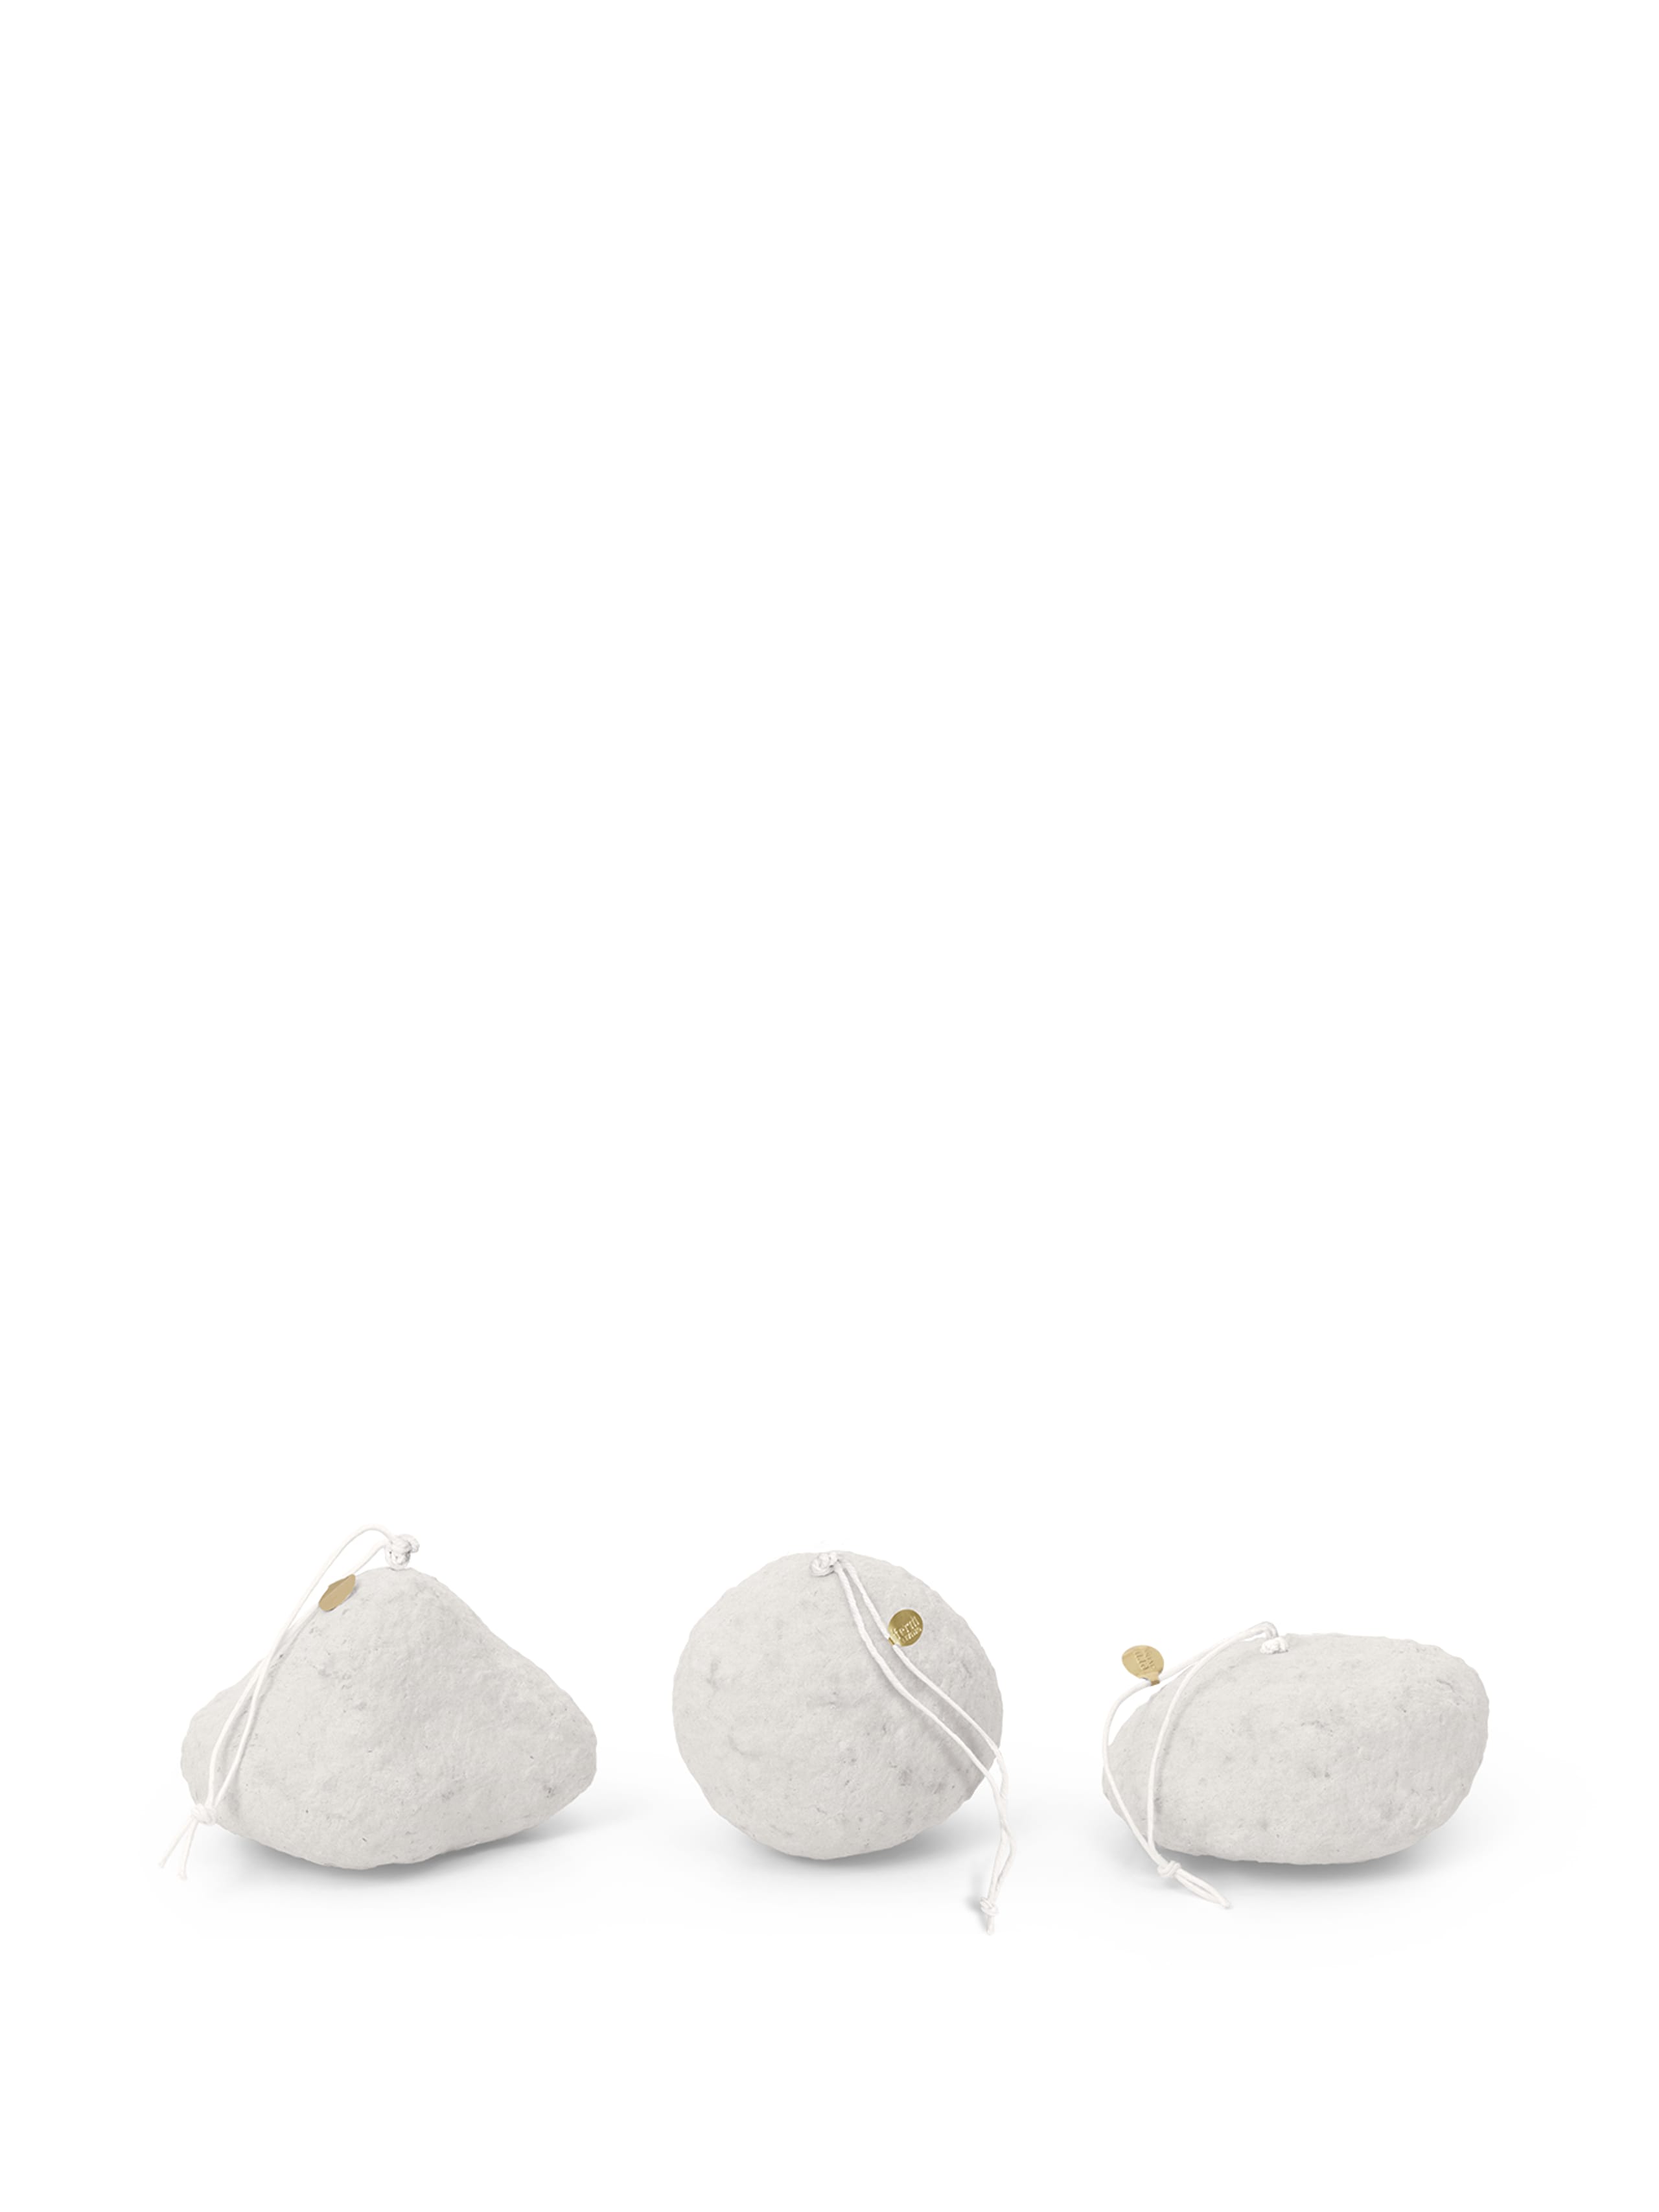 Ferm Living -  - Snowball Ornaments - Snowball Ornaments - Set of 3 - White